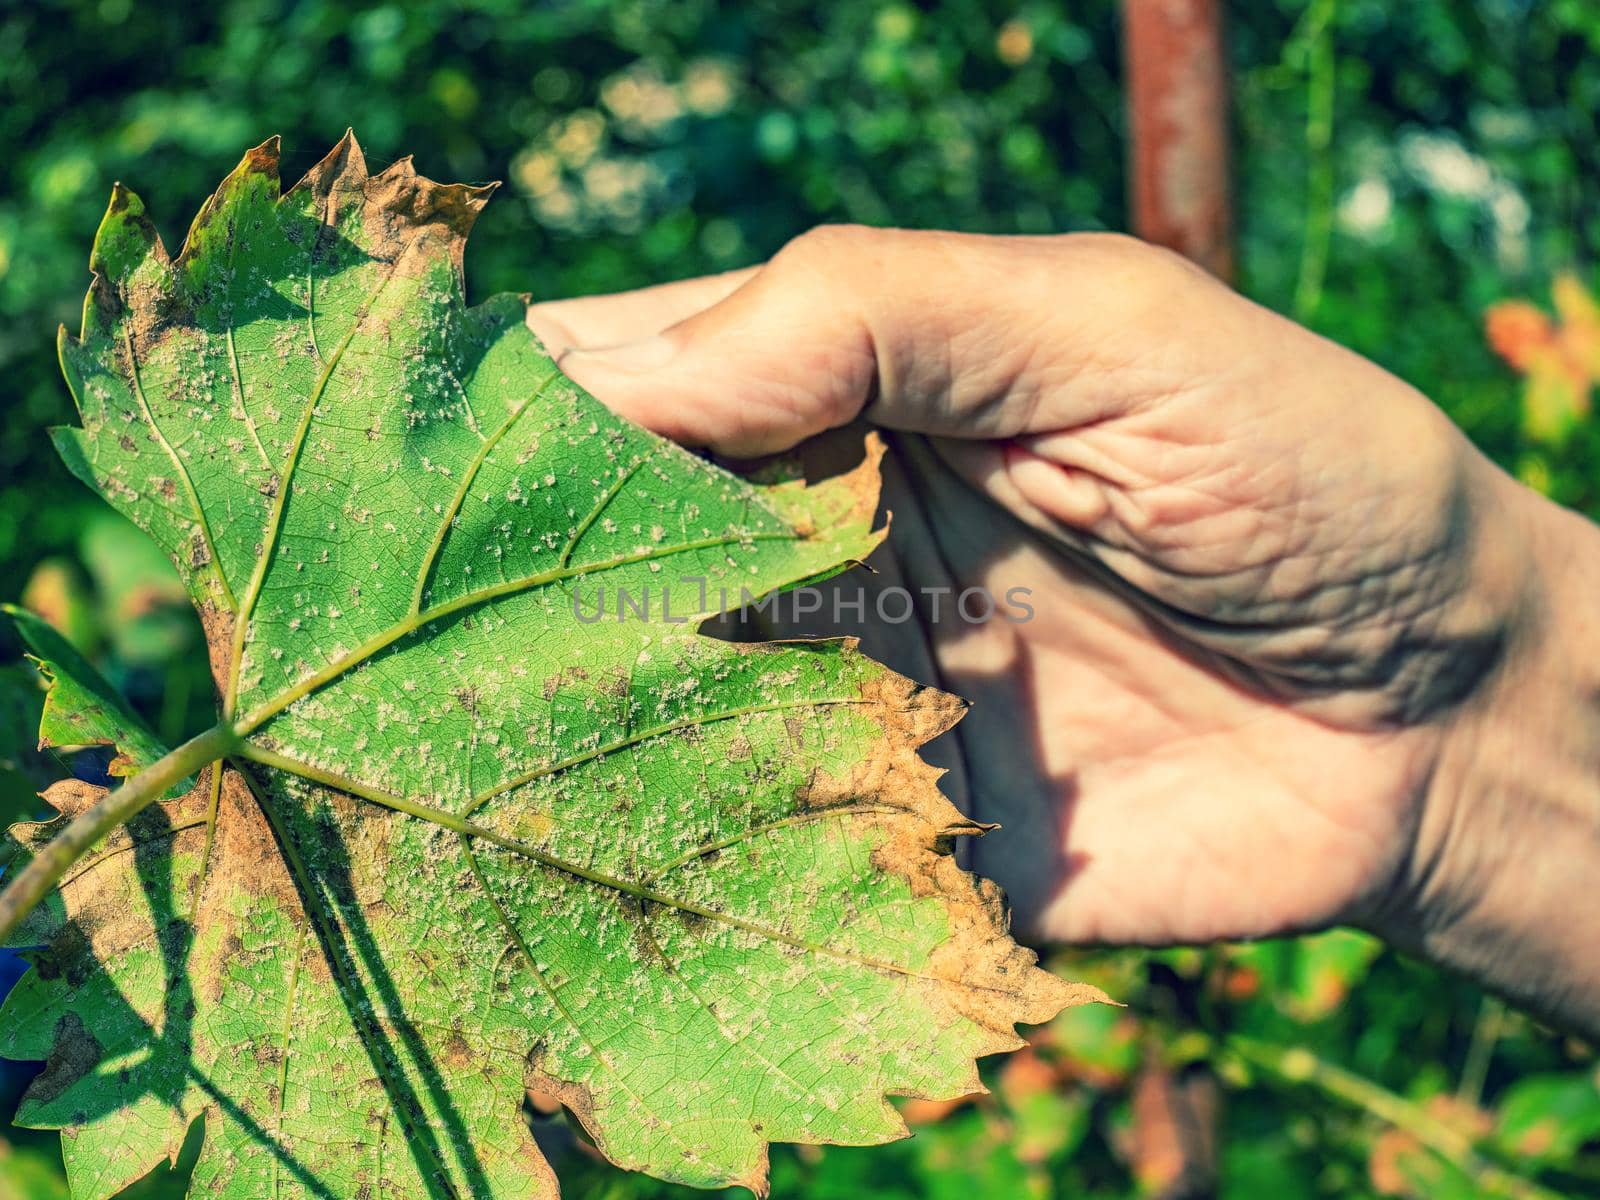 Vine leaf damaged by a white greenfly or spider mite. by rdonar2